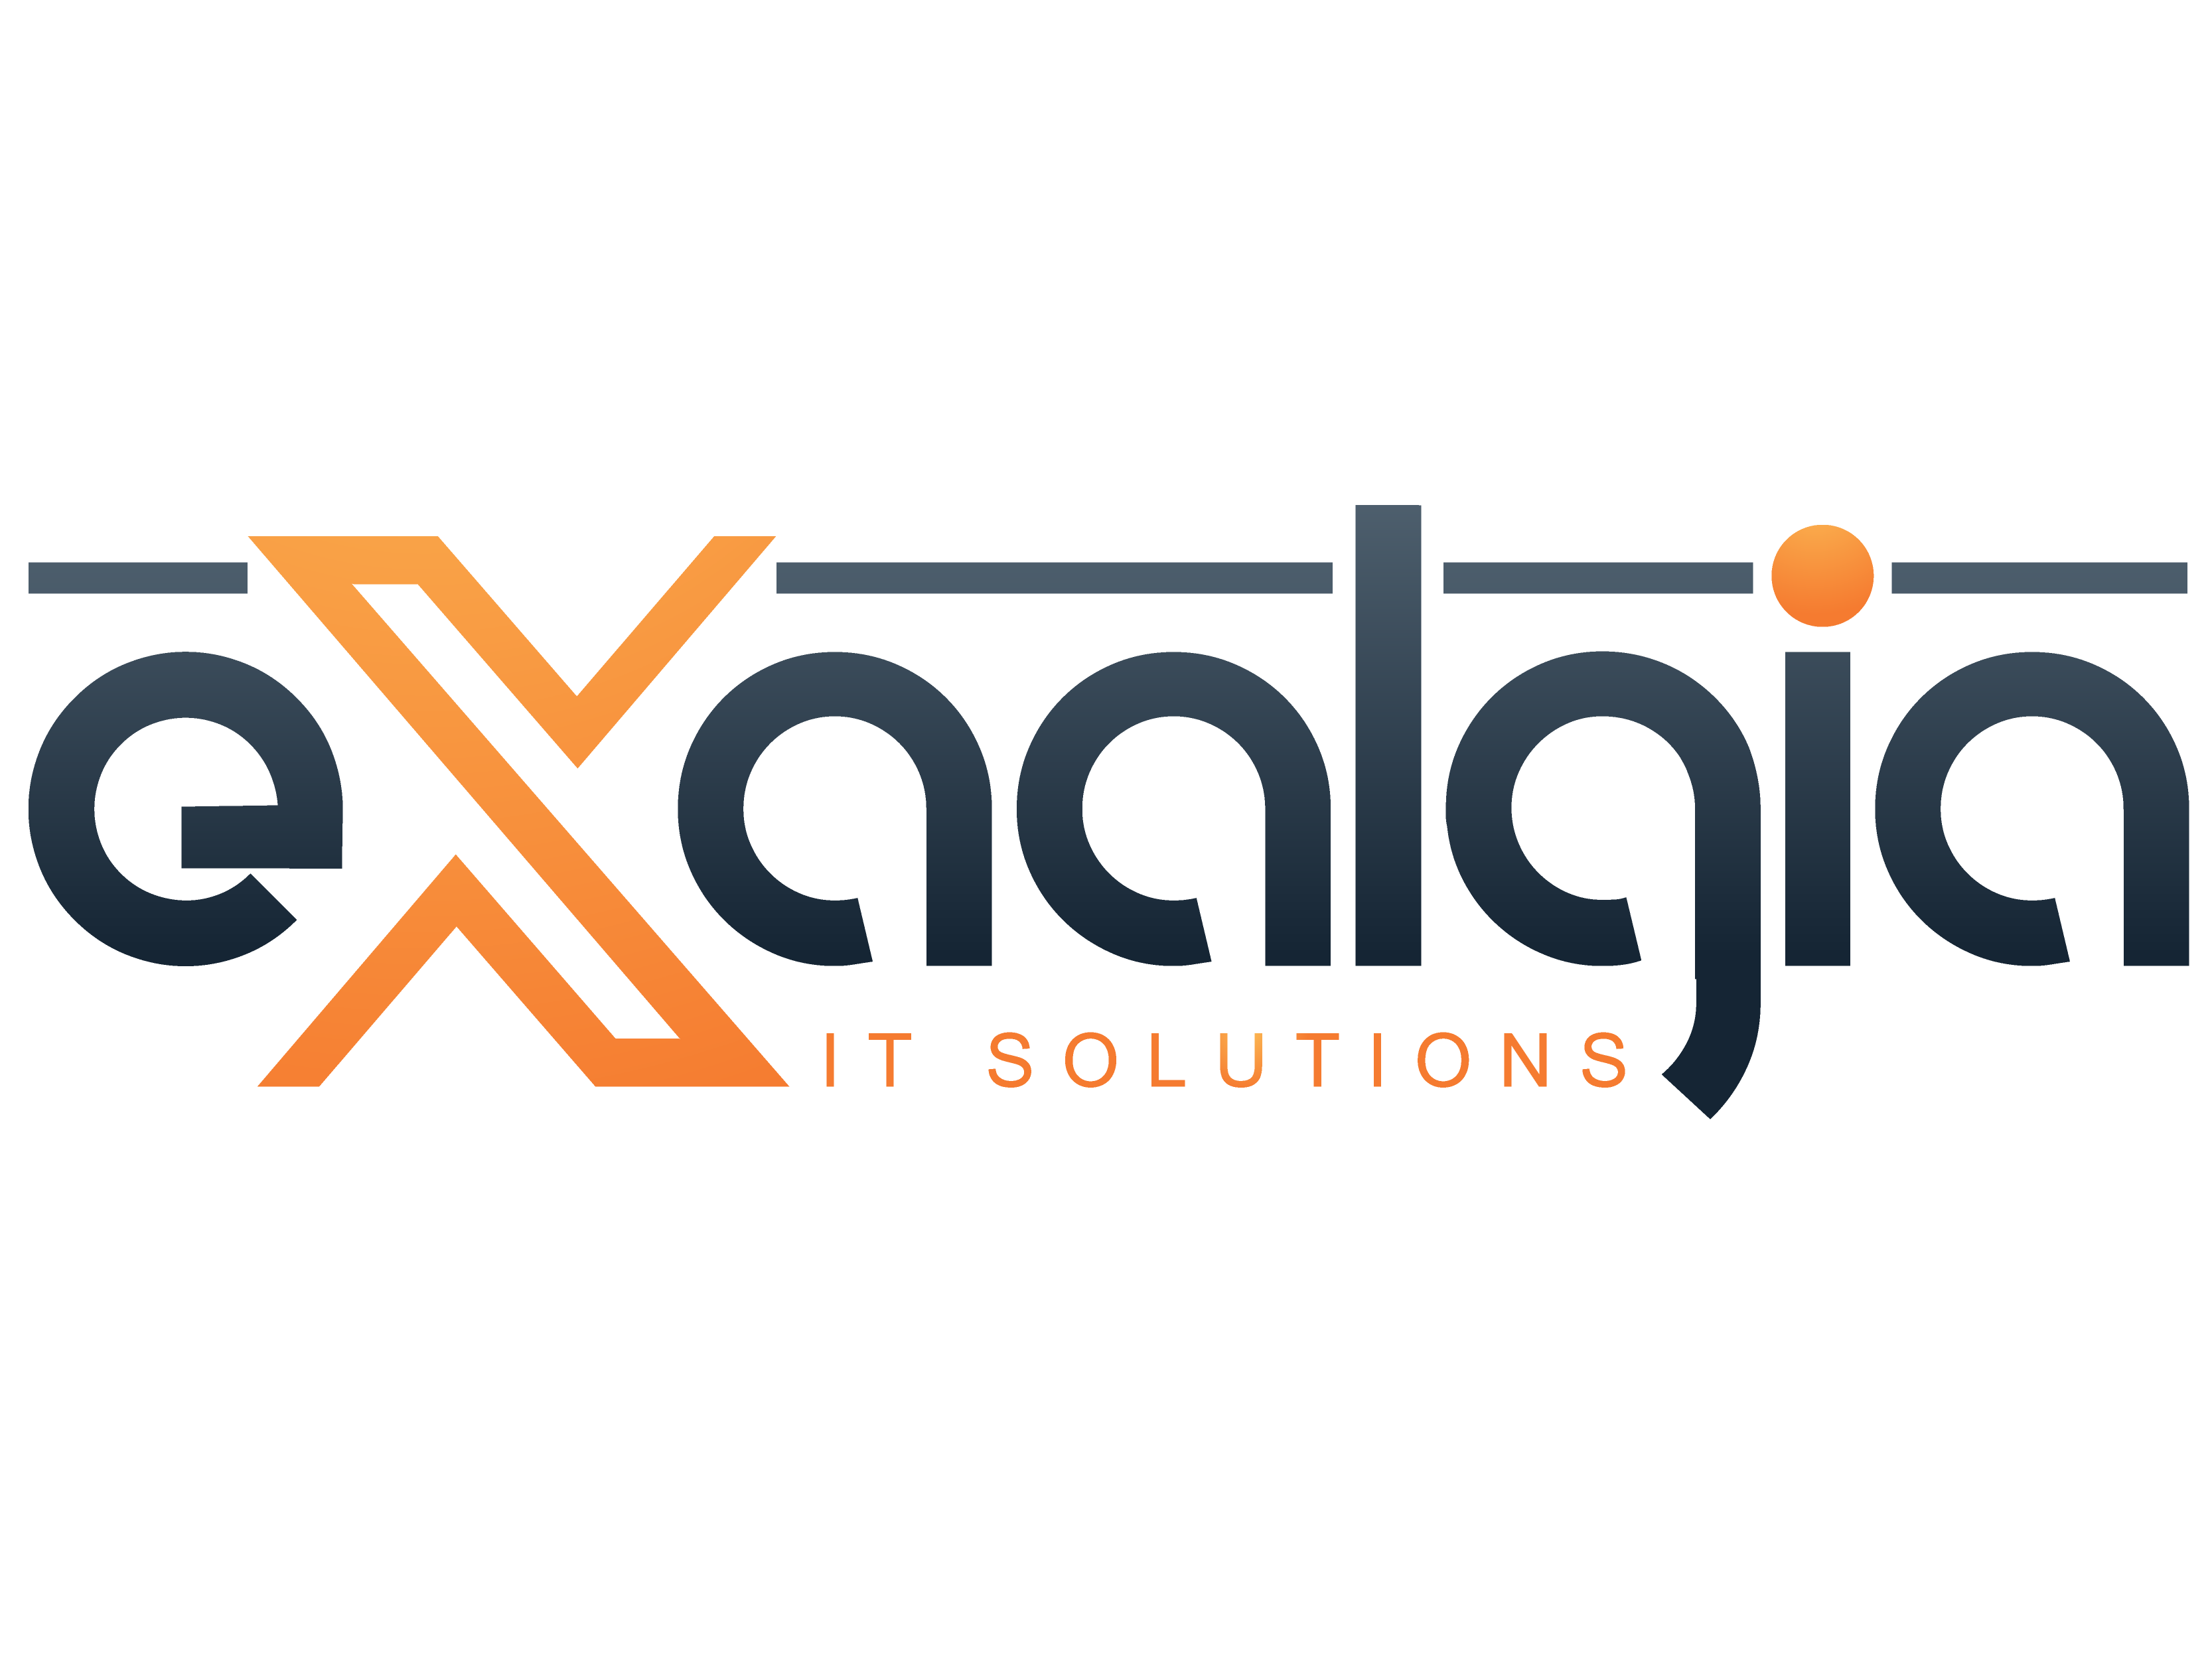 Top Search Engine Optimization Firm Logo: Exaalgia